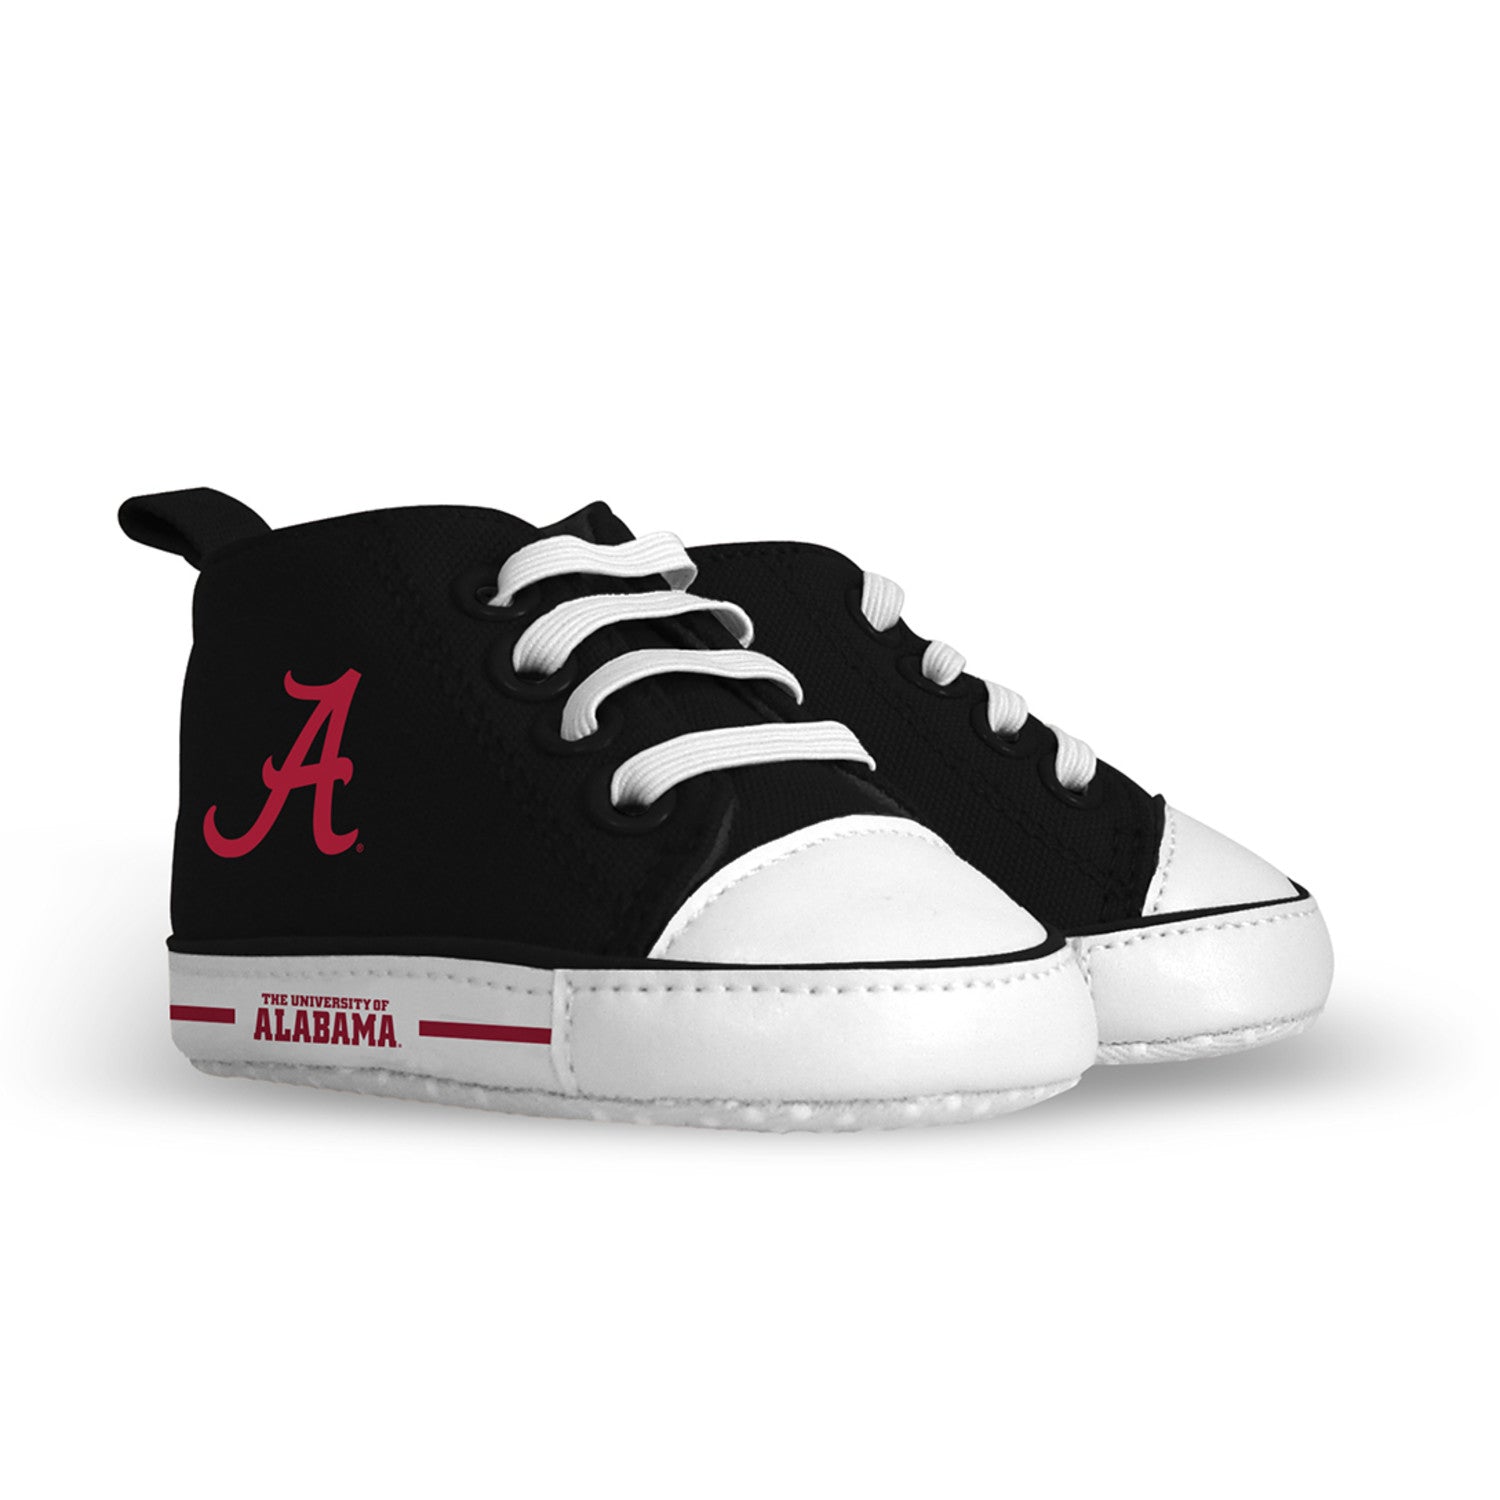 Alabama Crimson Tide Baby Shoes